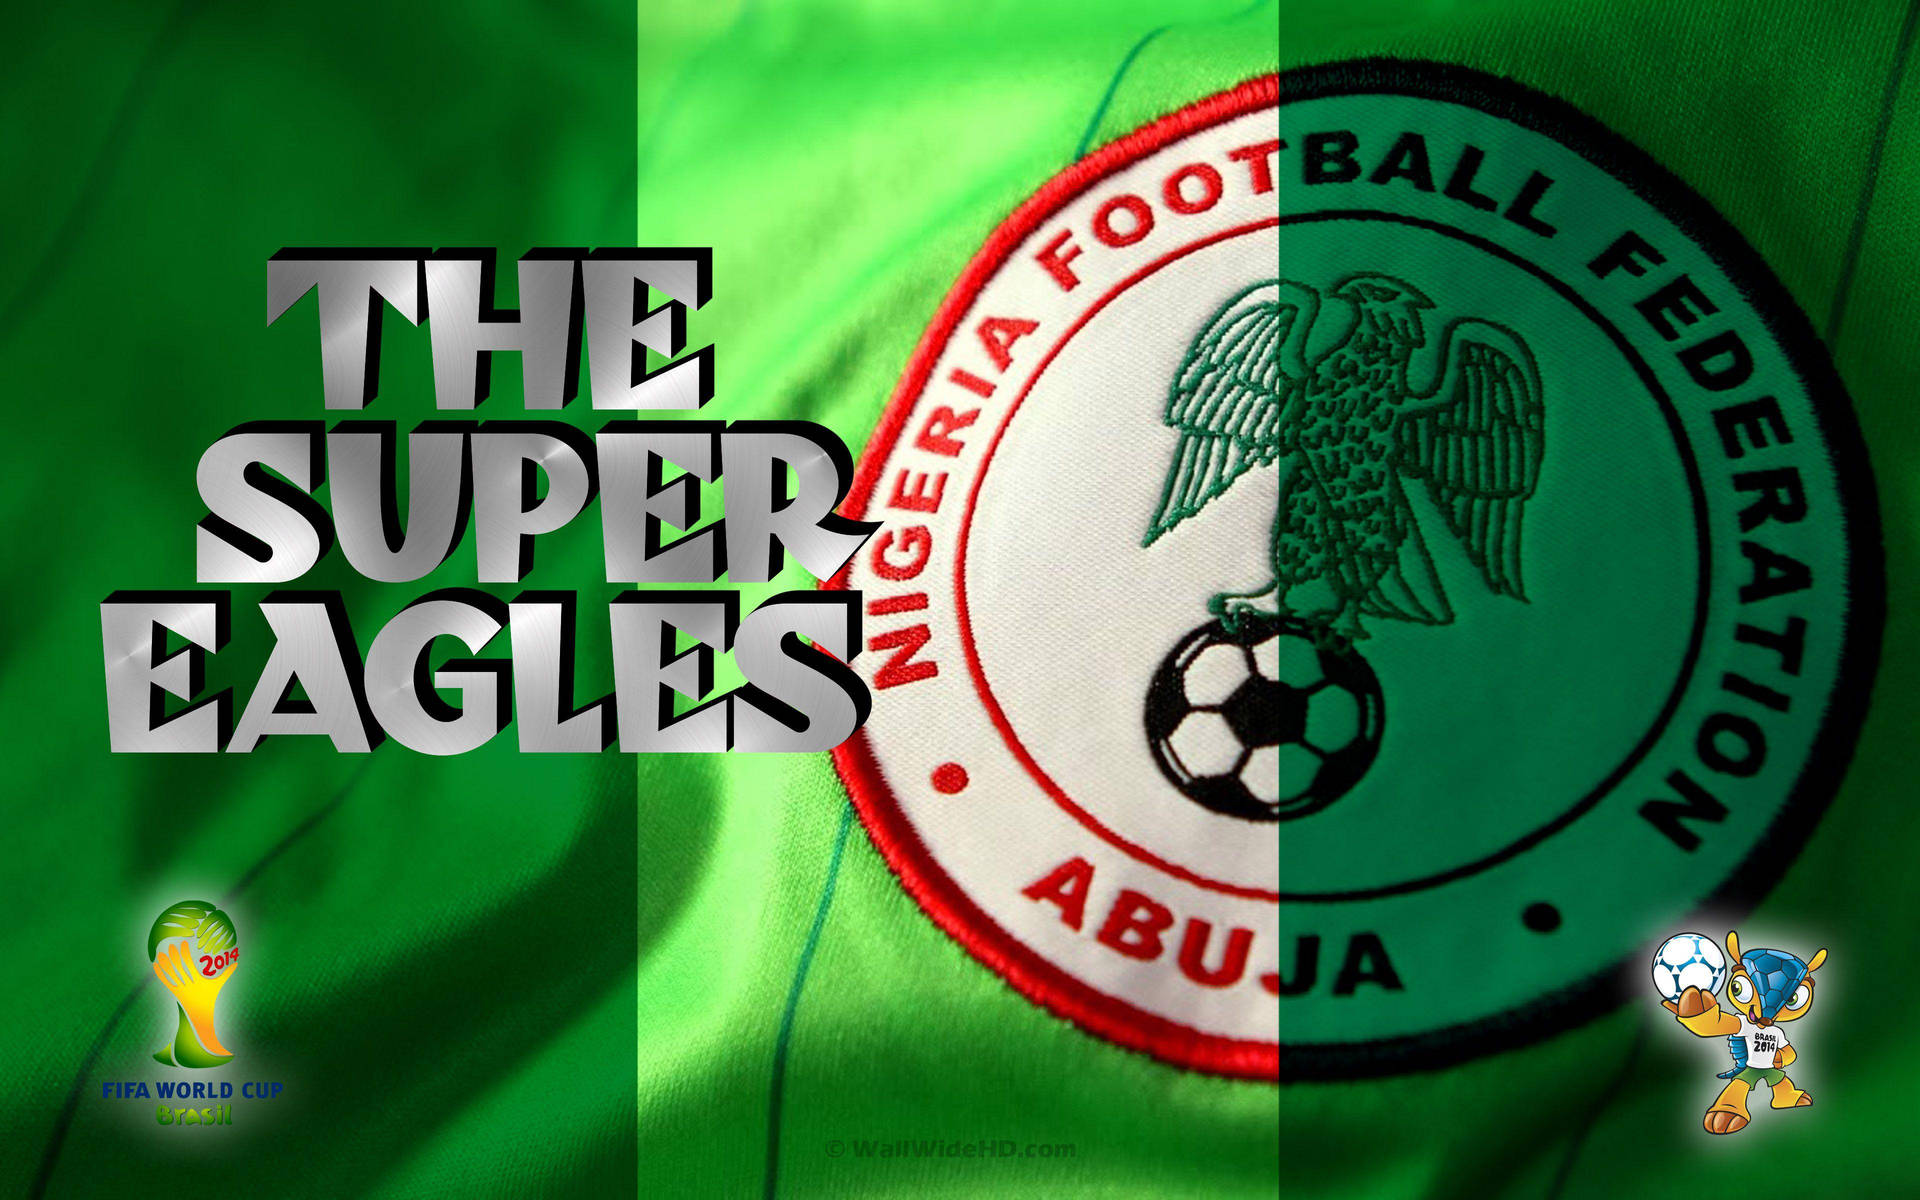 Nigeria Football Team Patch Background